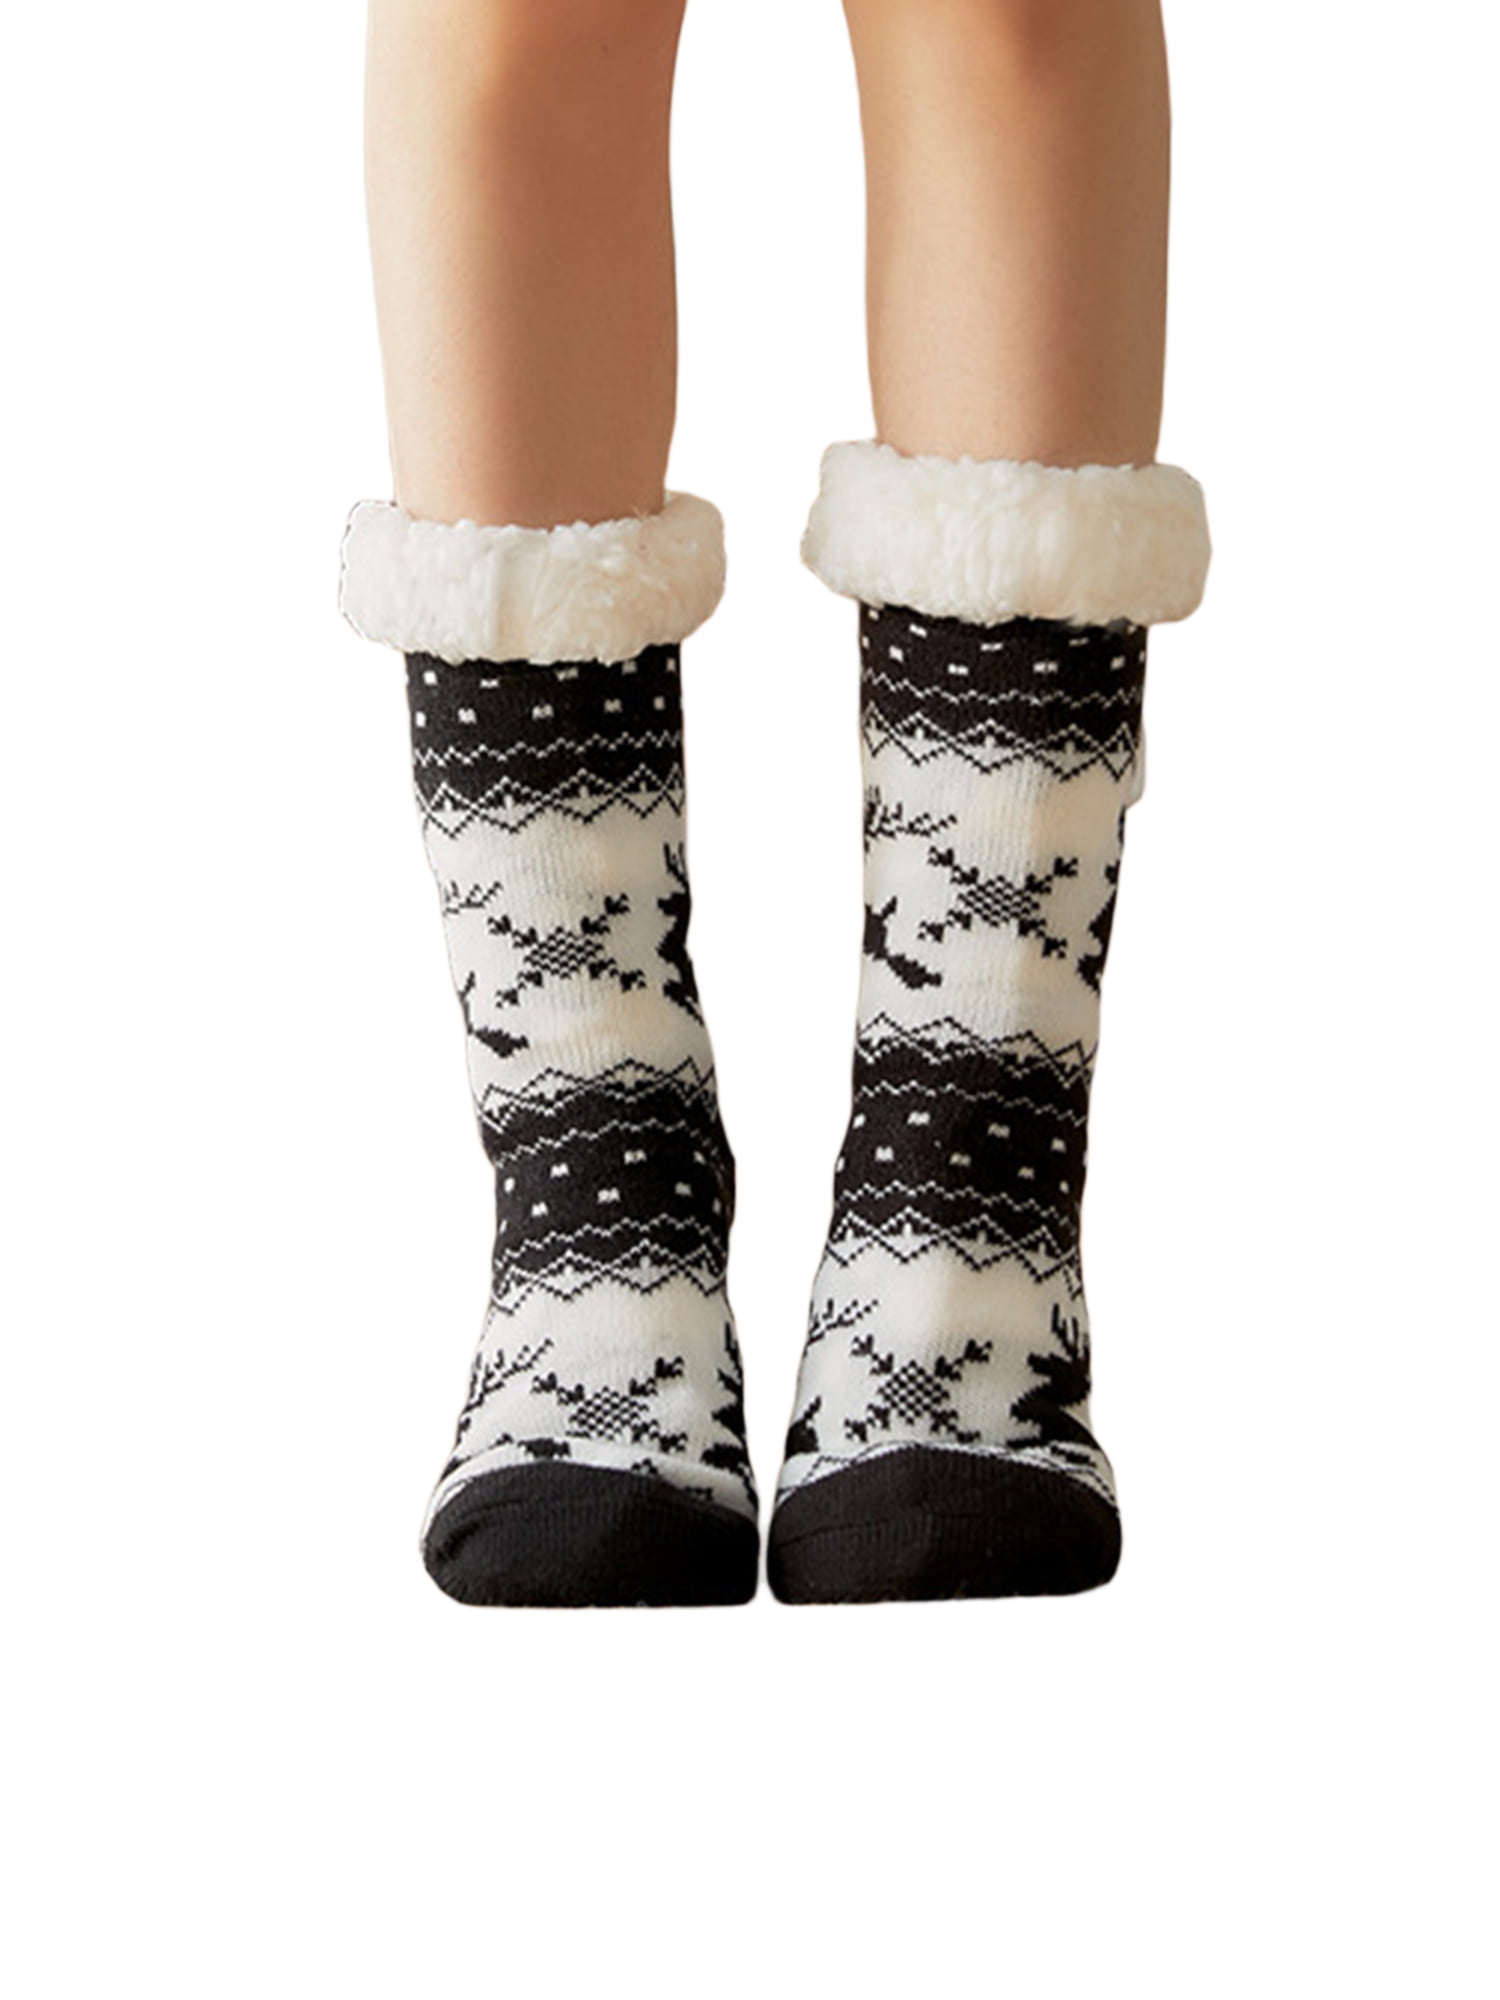 Women's Girls Kawaii Print Novelty Funny Socks Ladies Winter Warm Cotton Socks